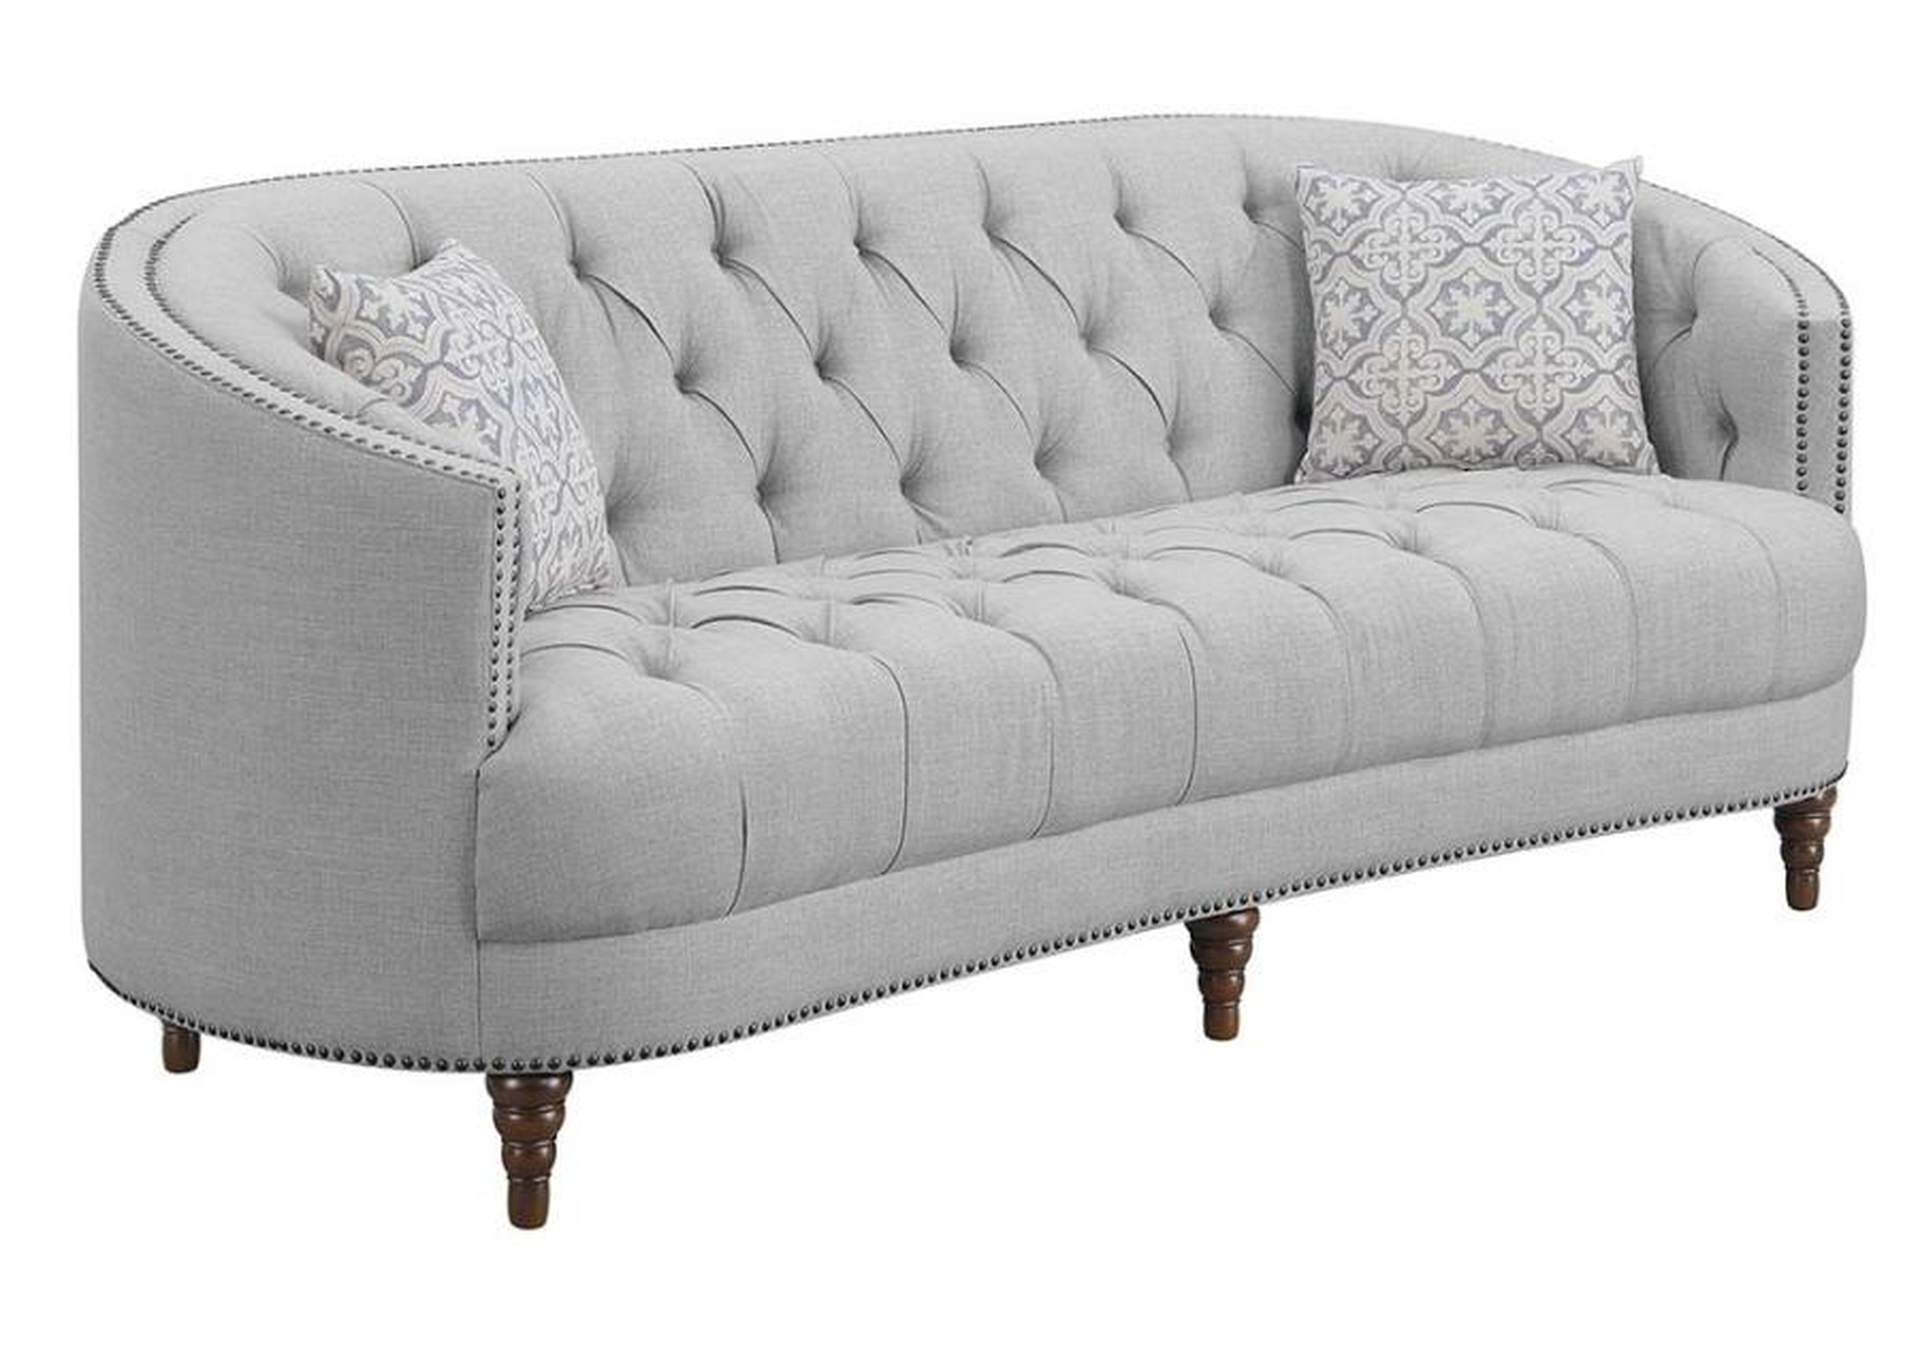 Avonlea Sloped Arm Upholstered Sofa Trim Grey,Coaster Furniture